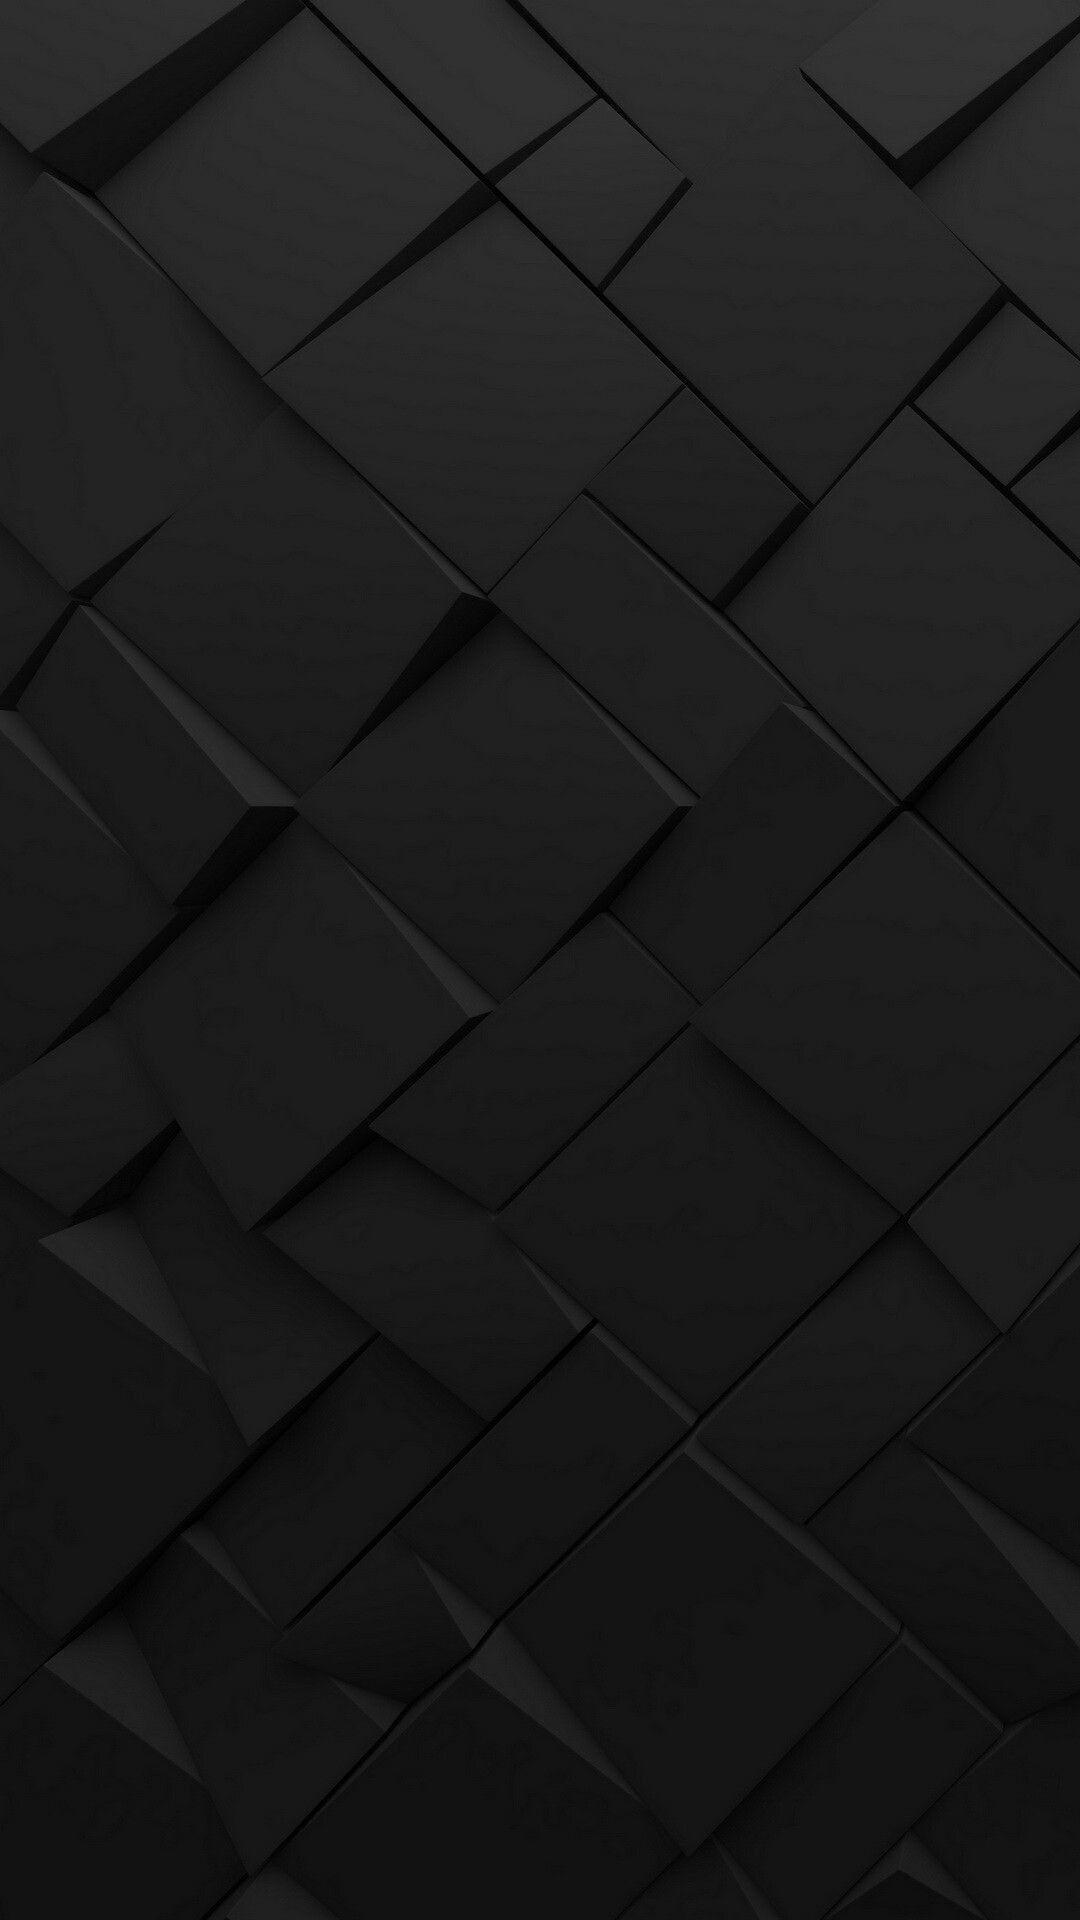 Dark Mobile Wallpapers - Top Free Dark Mobile Backgrounds - WallpaperAccess